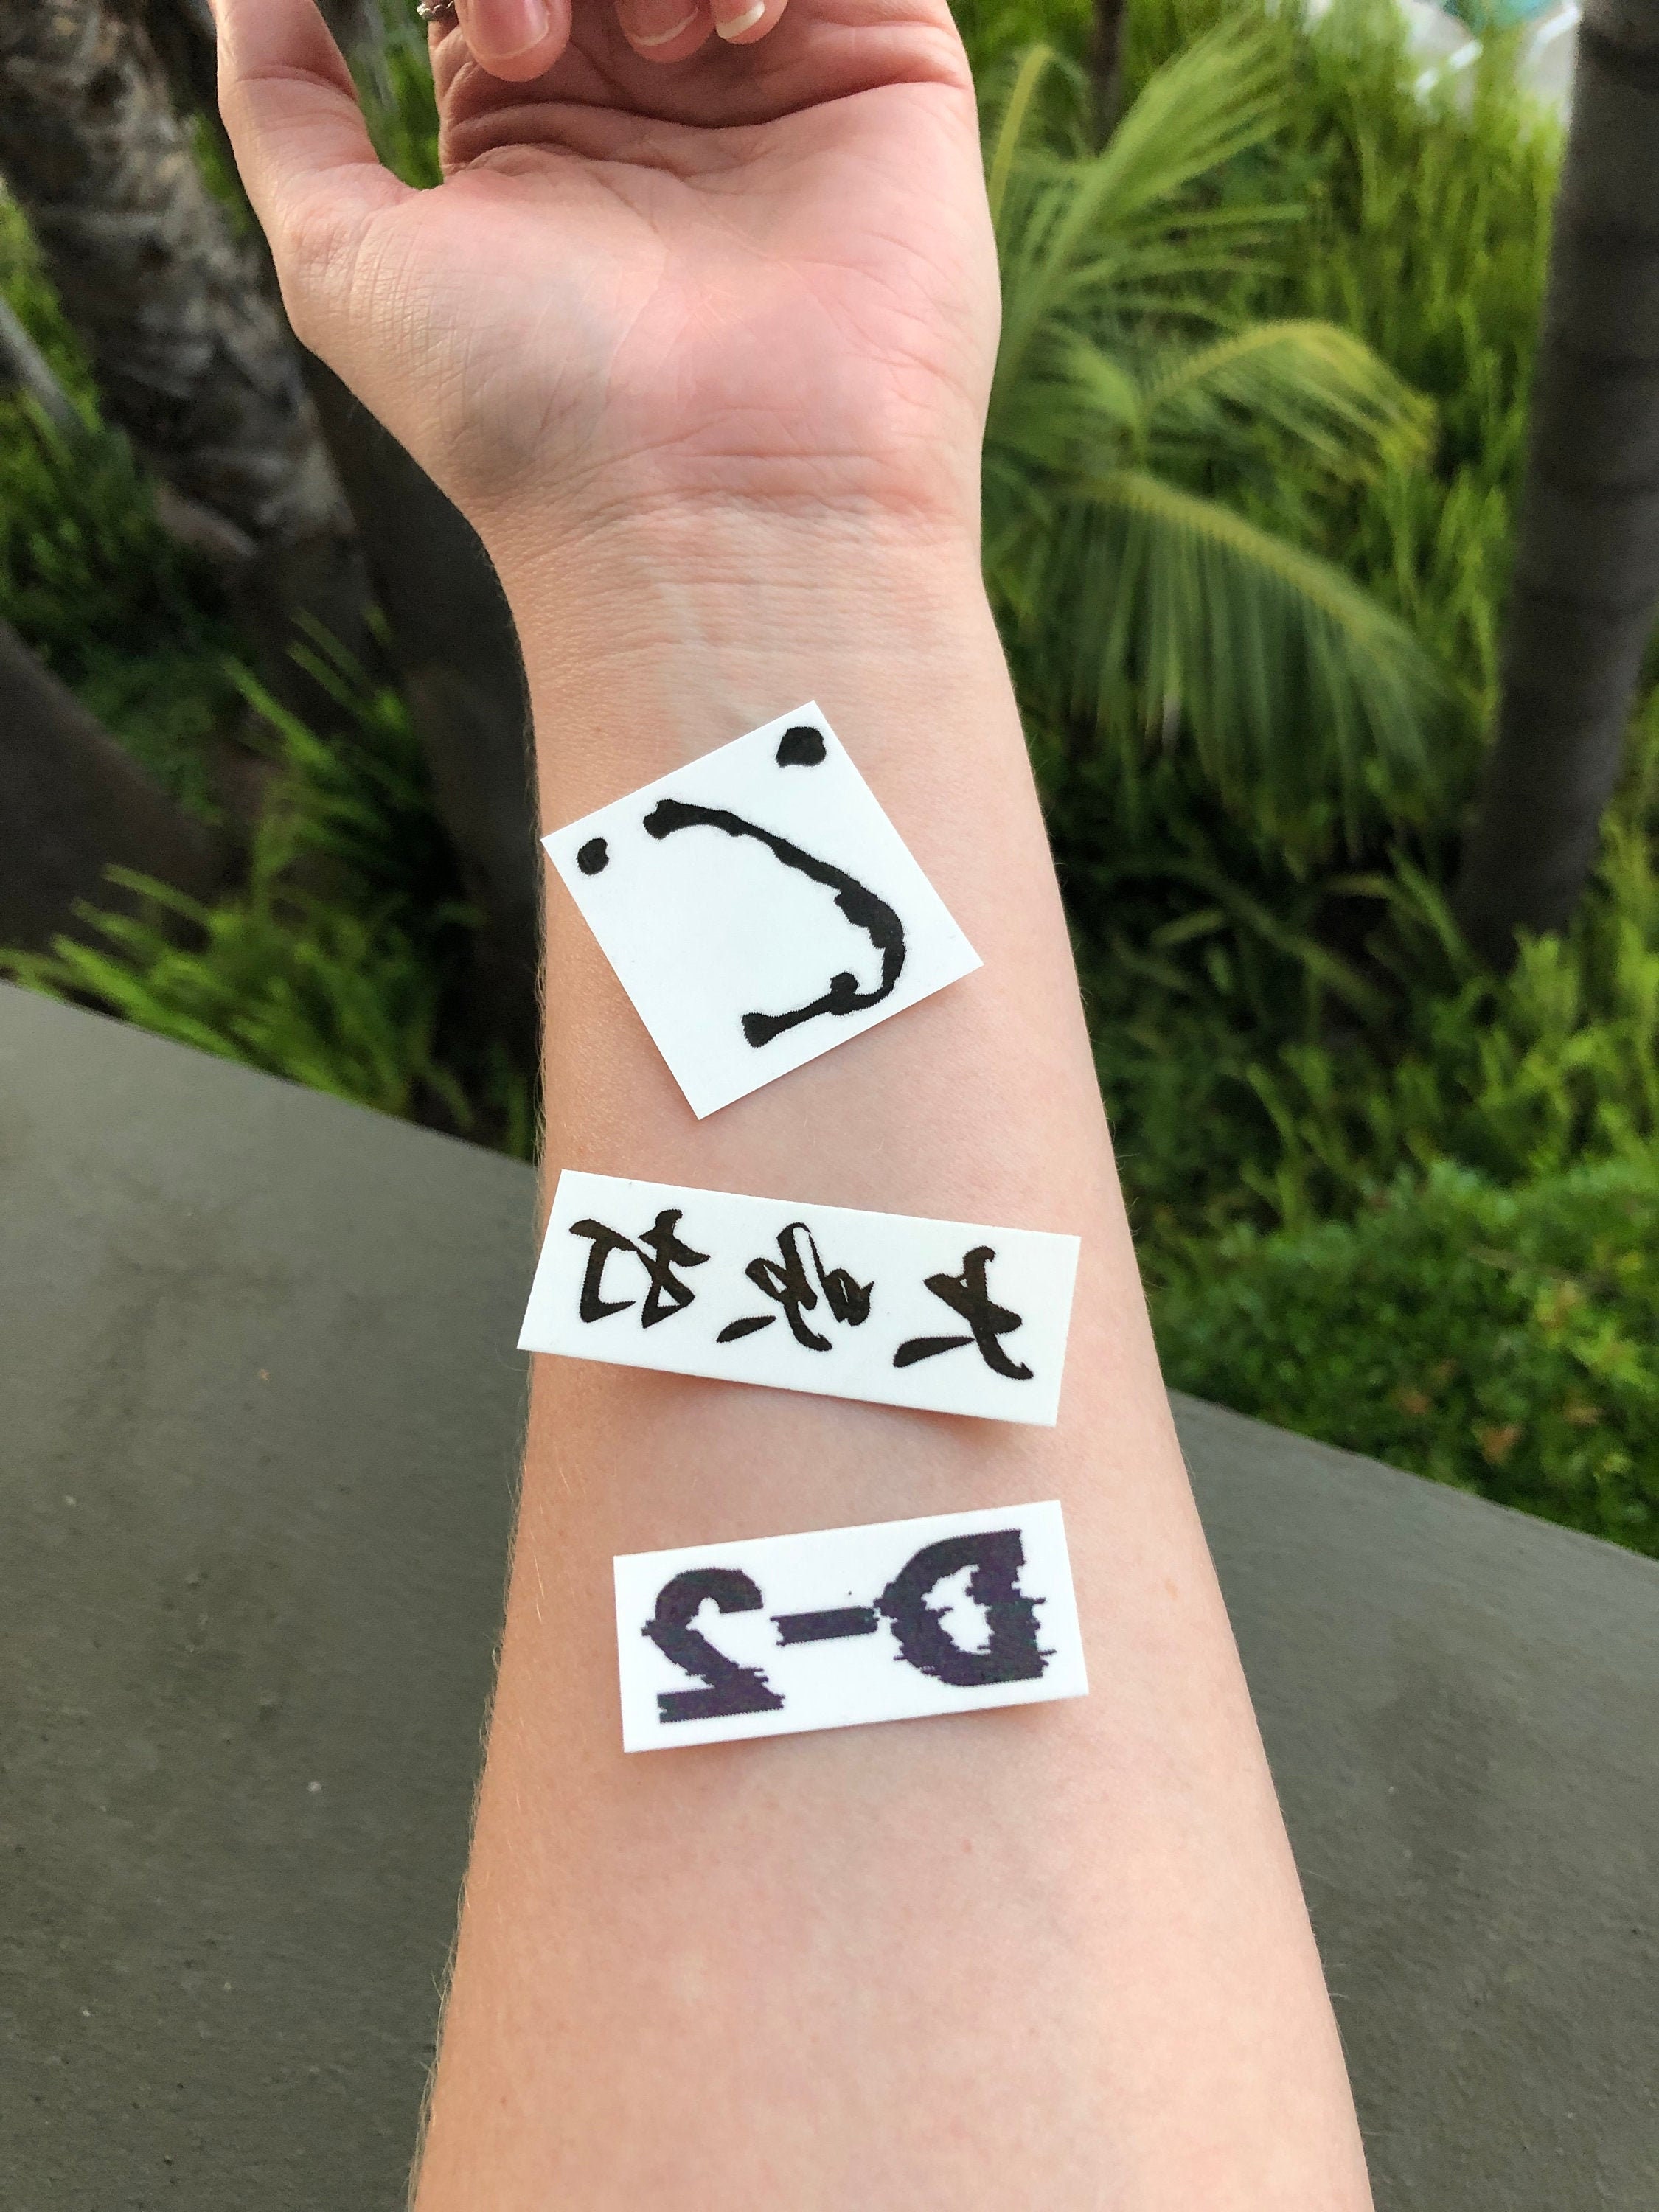 Treatment of Symbol Tattoo - Prejuvenation